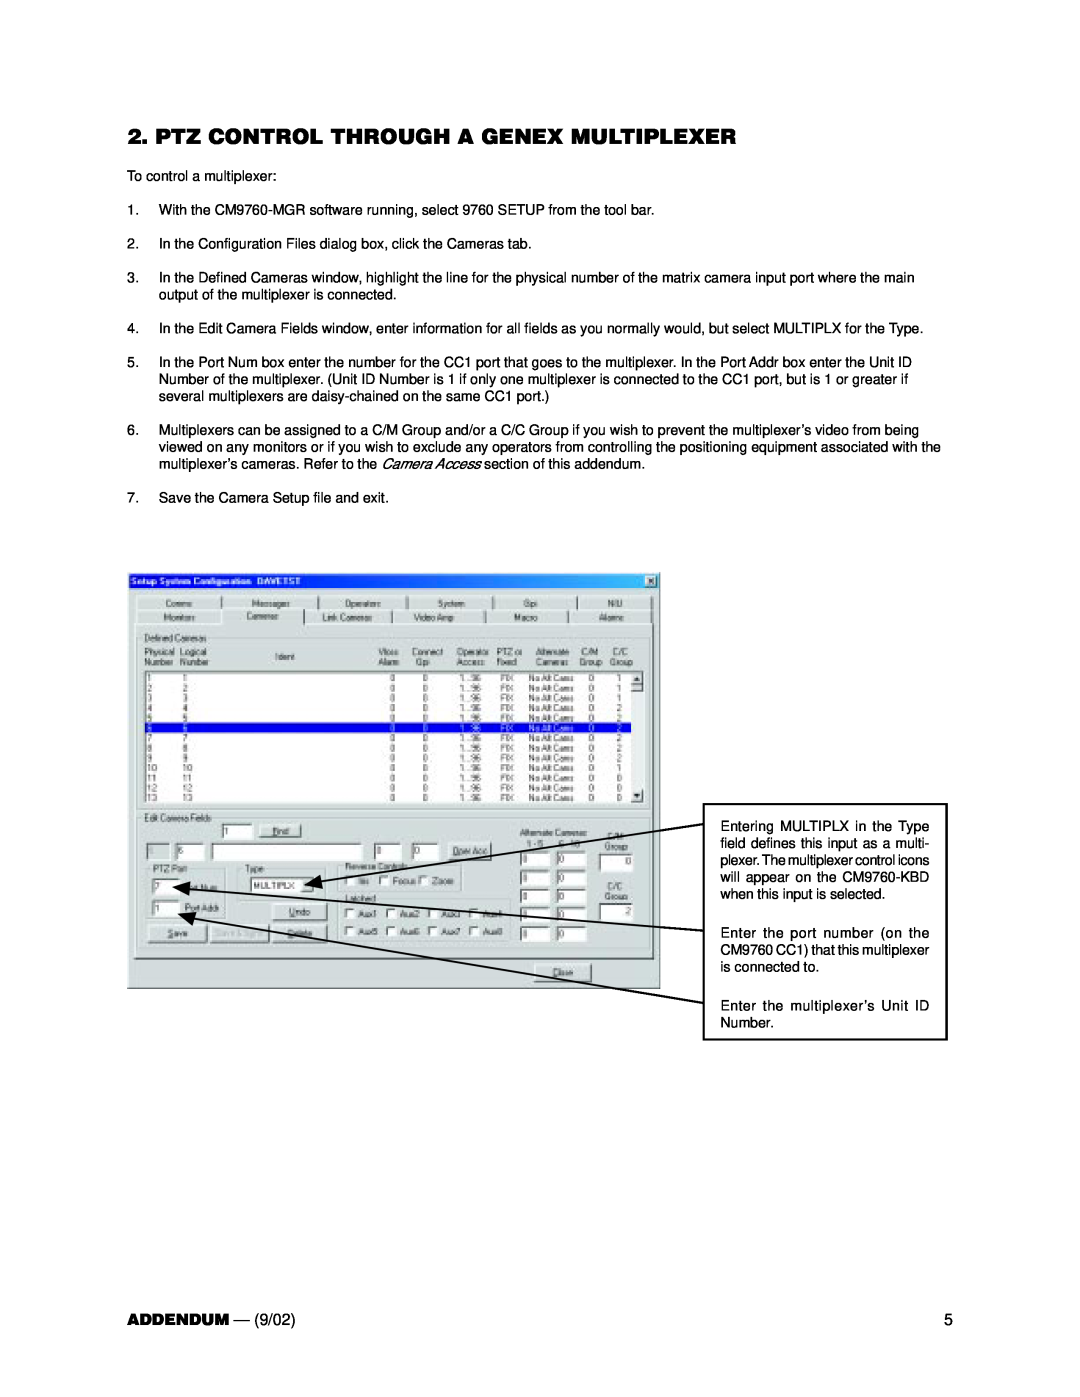 Pelco CM9760-MGR user manual Ptz Control Through A Genex Multiplexer, ADDENDUM - 9/02 